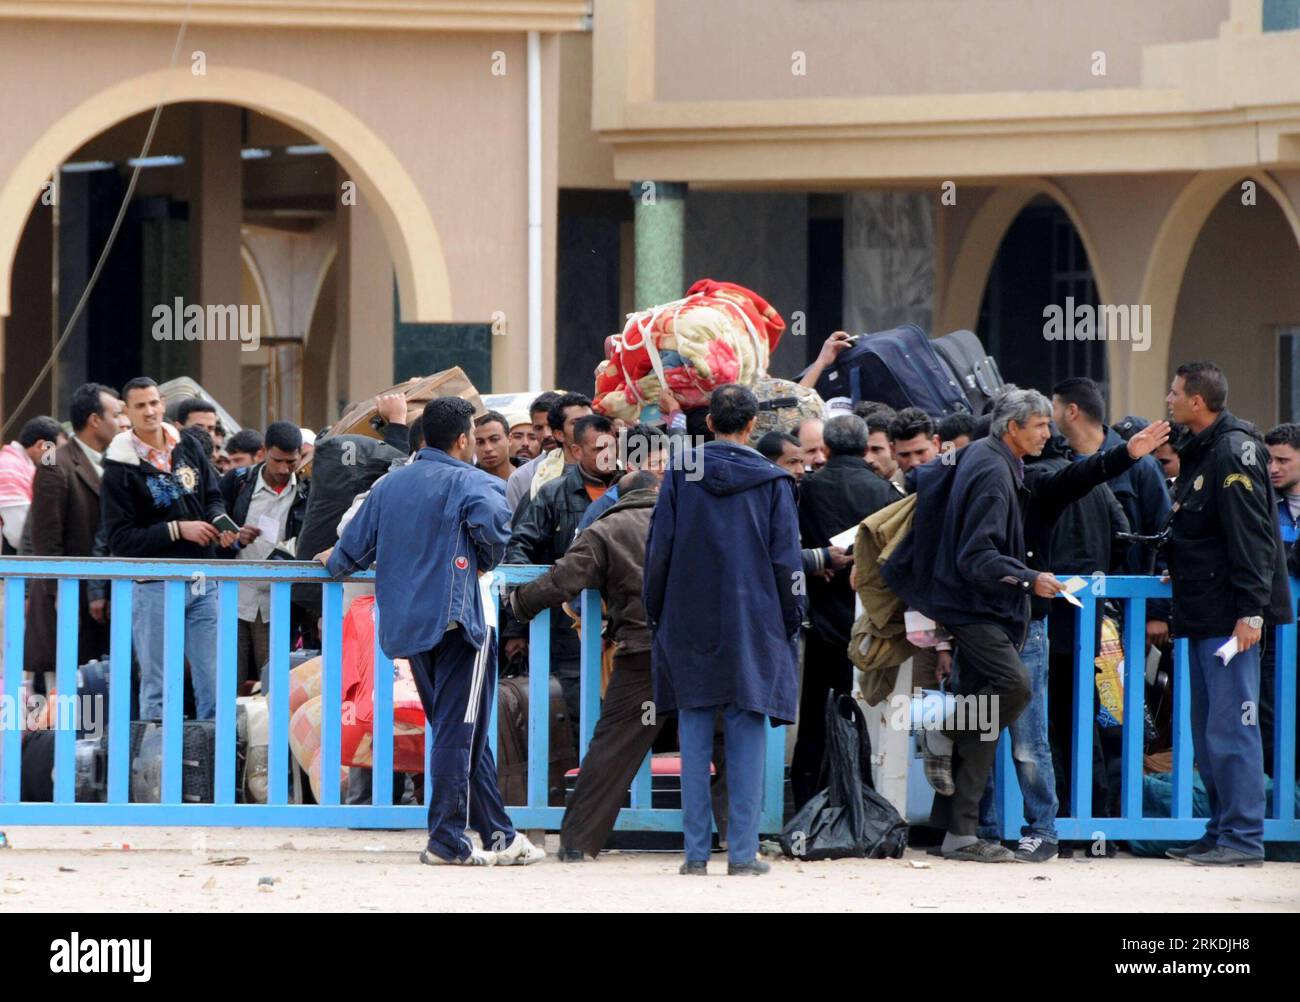 Bildnummer: 54959226  Datum: 25.02.2011  Copyright: imago/Xinhua (110226) -- RAS EL JEDIR, Feb. 26, 2011 (Xinhua) -- Evacuators gather at the Ras El Jedir cross point in Tunisia, Feb. 25, 2011. Thousands of fleeing the violence and insecurity in neighboring Libya crossed the Tunisian border at the Ras El Jedir cross point some 600 km south of the capital. At least 5,000 evacuators entered Tunisia on Friday. (Xinhua/Kang Xinwen) (lyi) TUNISIA-RAS EL JEDIR-LIBYA-EVACUATORS PUBLICATIONxNOTxINxCHN Gesellschaft Politik Evakuierung kbdig xsk 2011 quer  o0 Evakuieren Ausländer    Bildnummer 54959226 Stock Photo